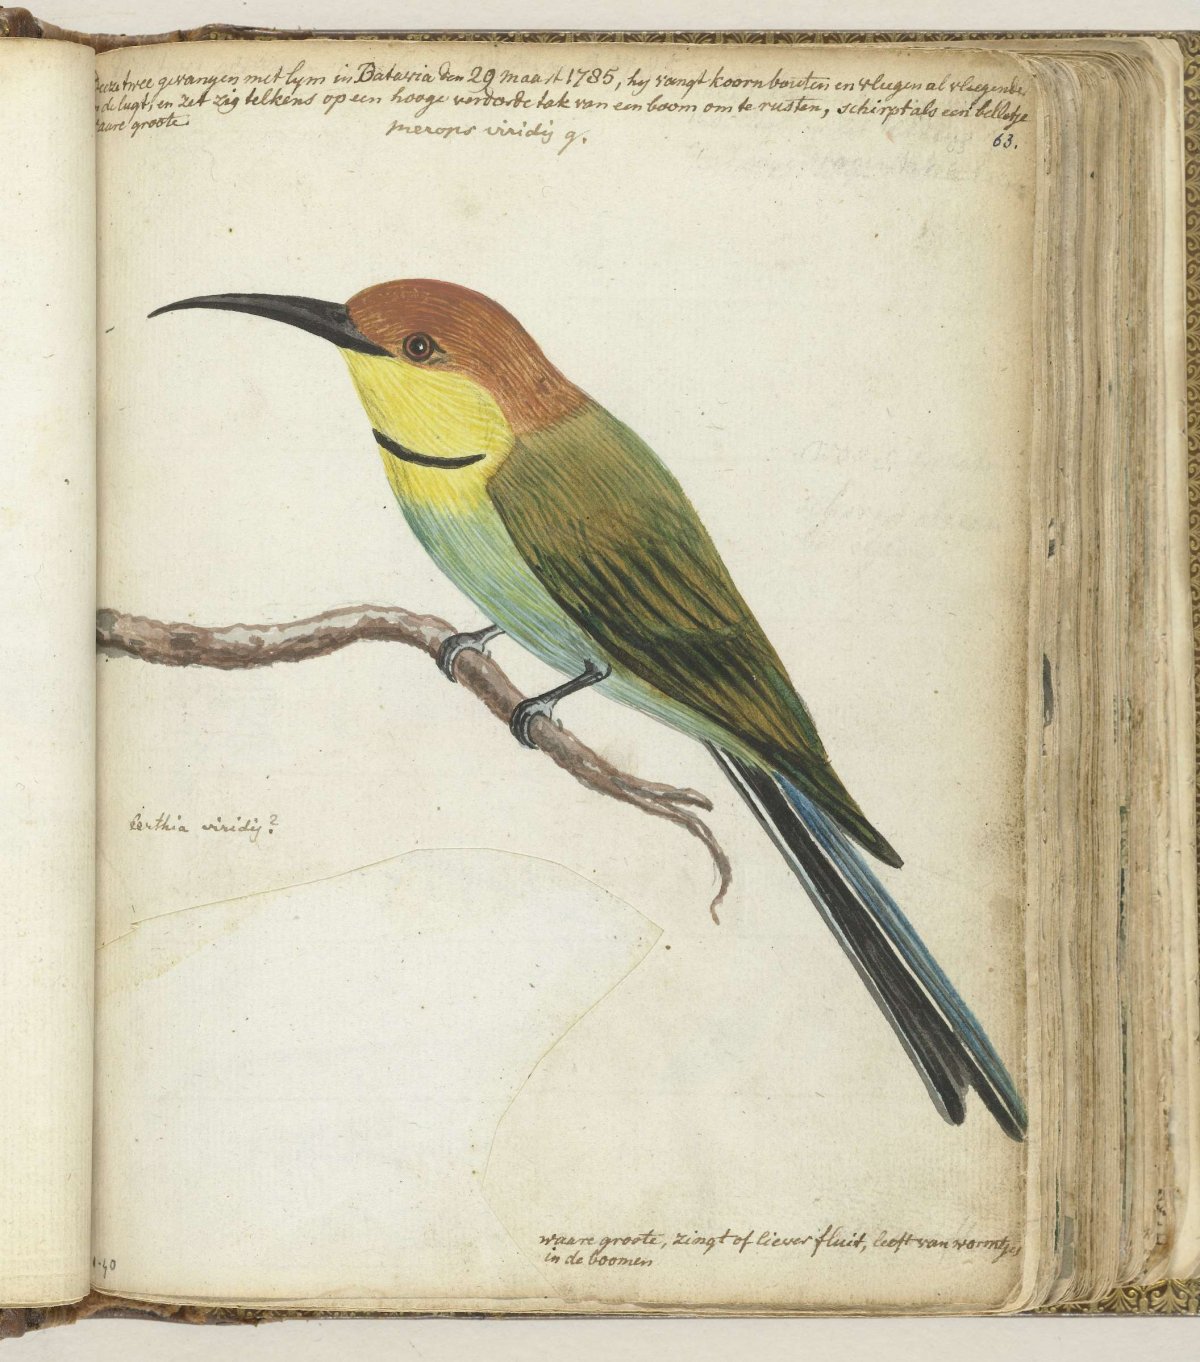 Small bird on branch, Jan Brandes, 1785